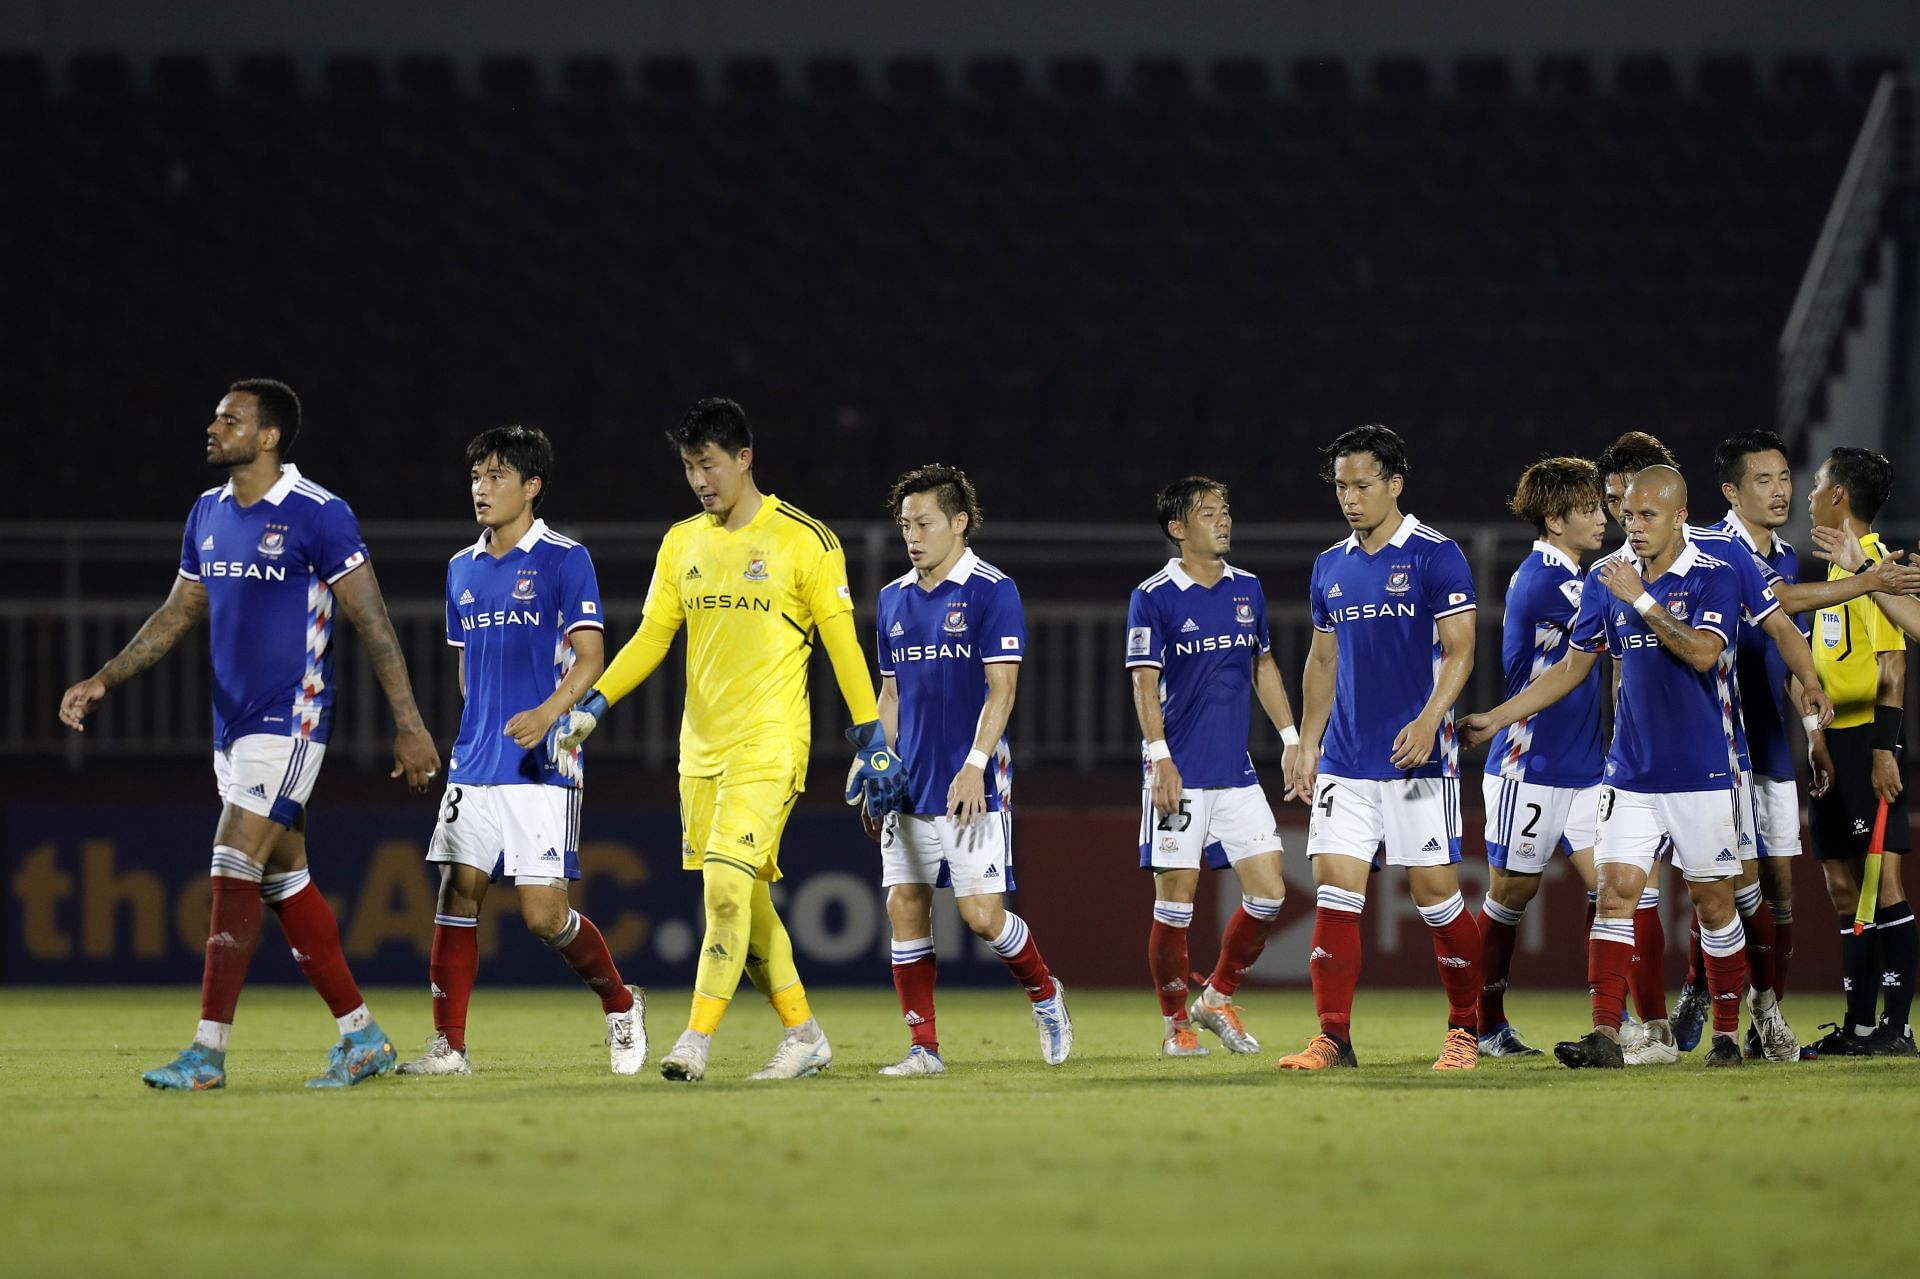 Yokohama F Marinos face Sanfrecce Hiroshima in a J1 League clash on Wednesday